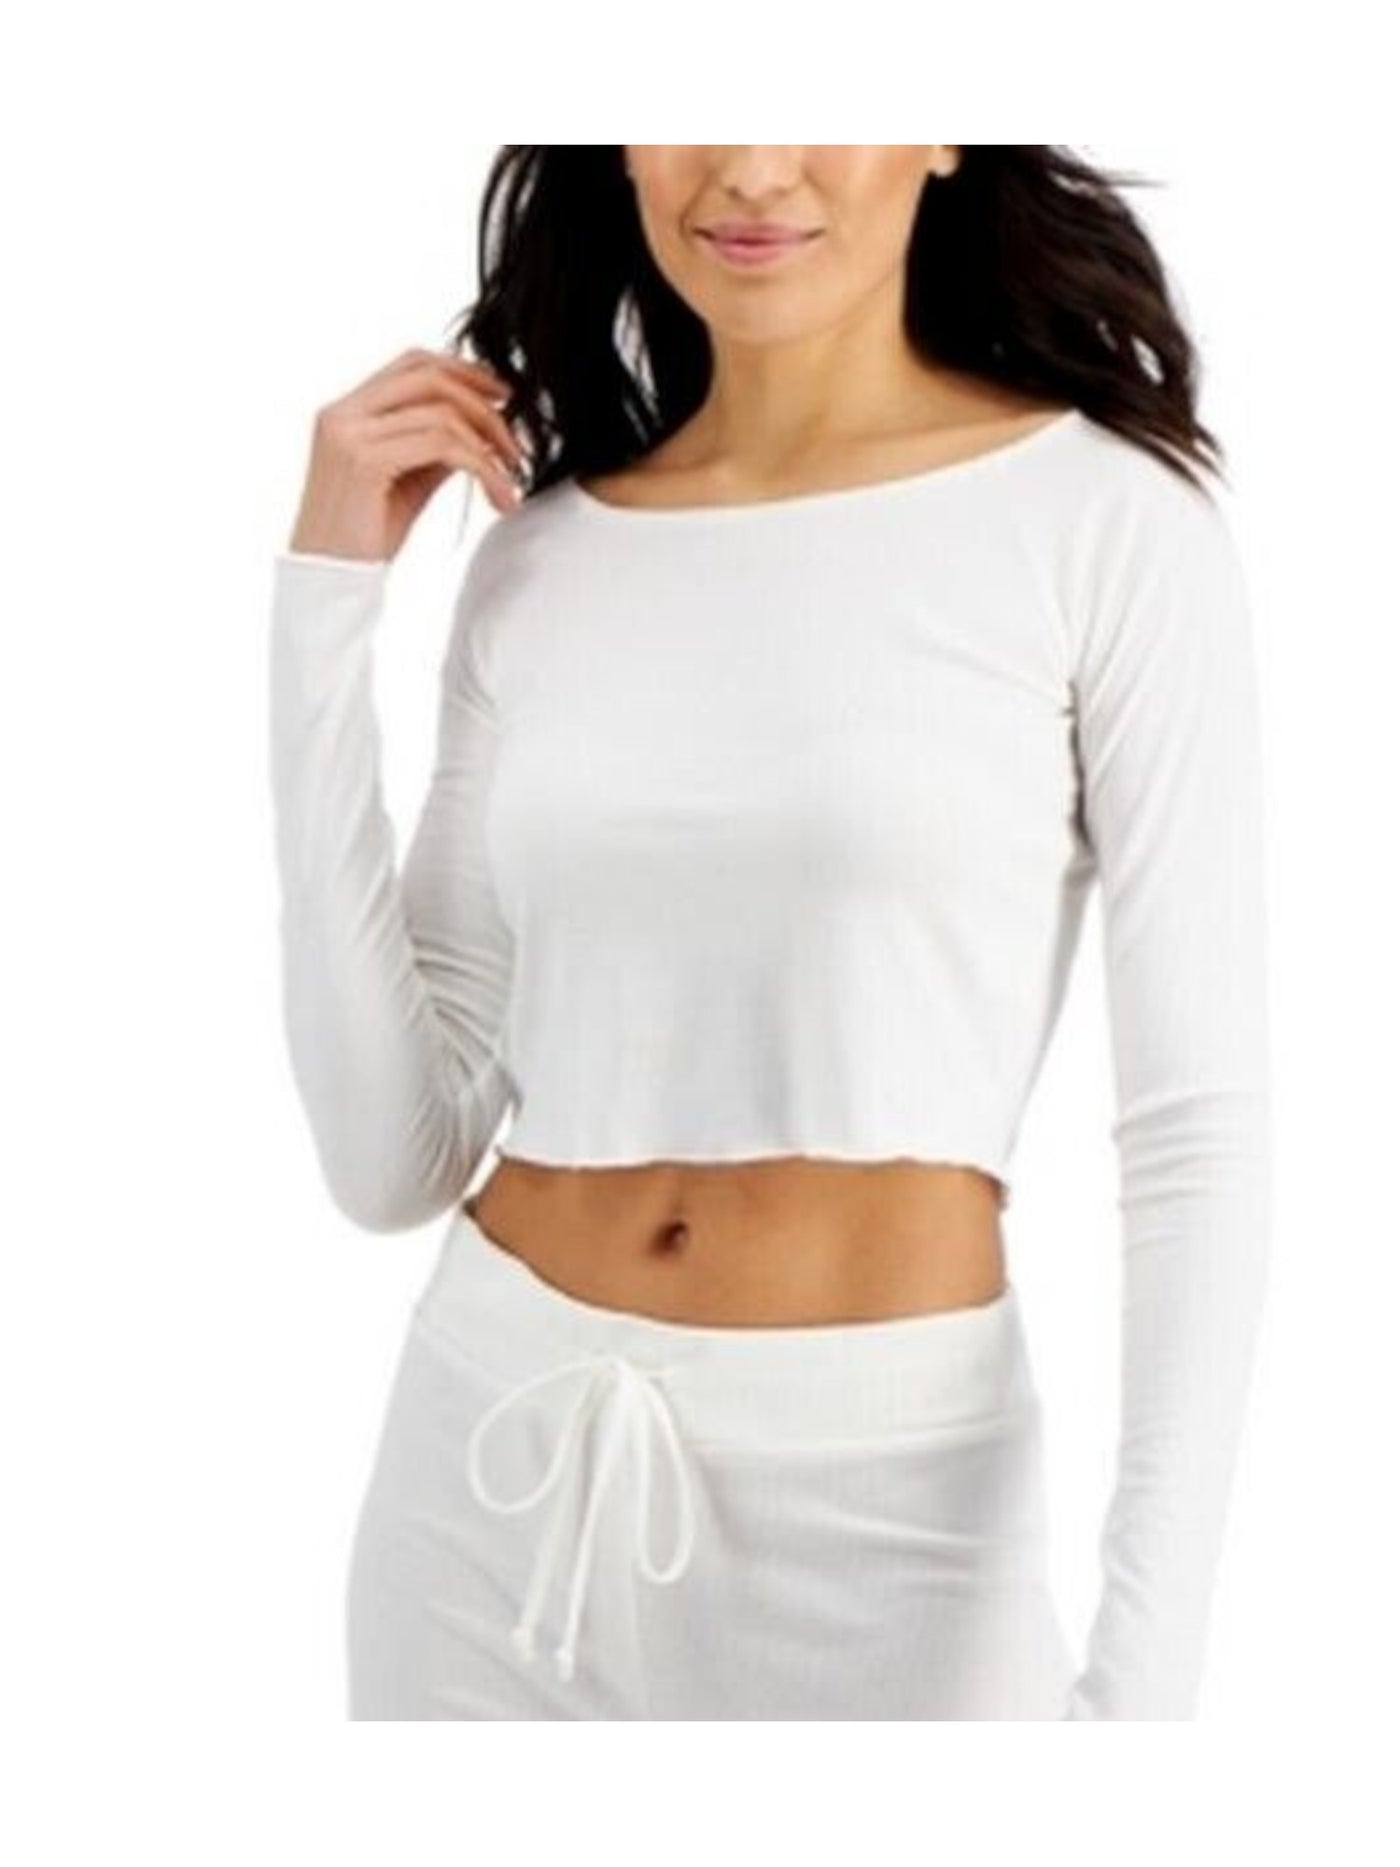 JENNI INTIMATES Intimates White Cropped Sleep Shirt Pajama Top M